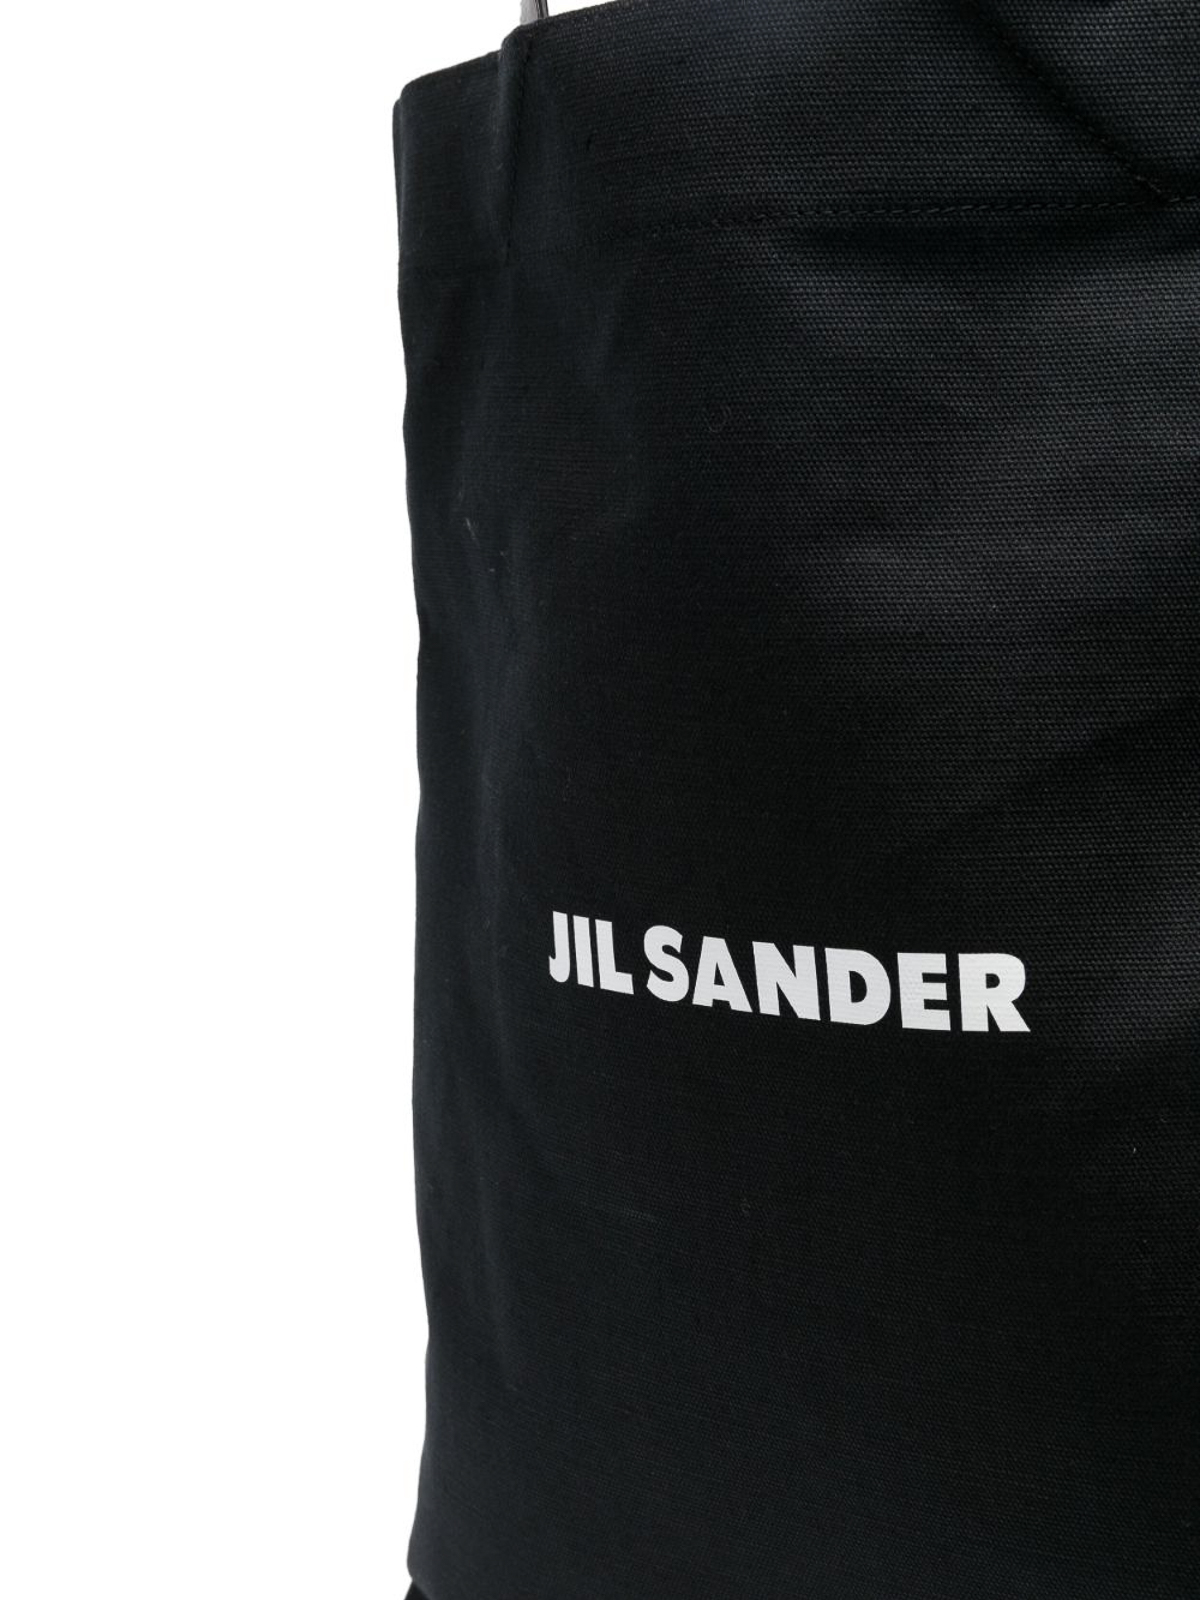 Shop Jil Sander Book Tote Canvas Shopping Bag In Black